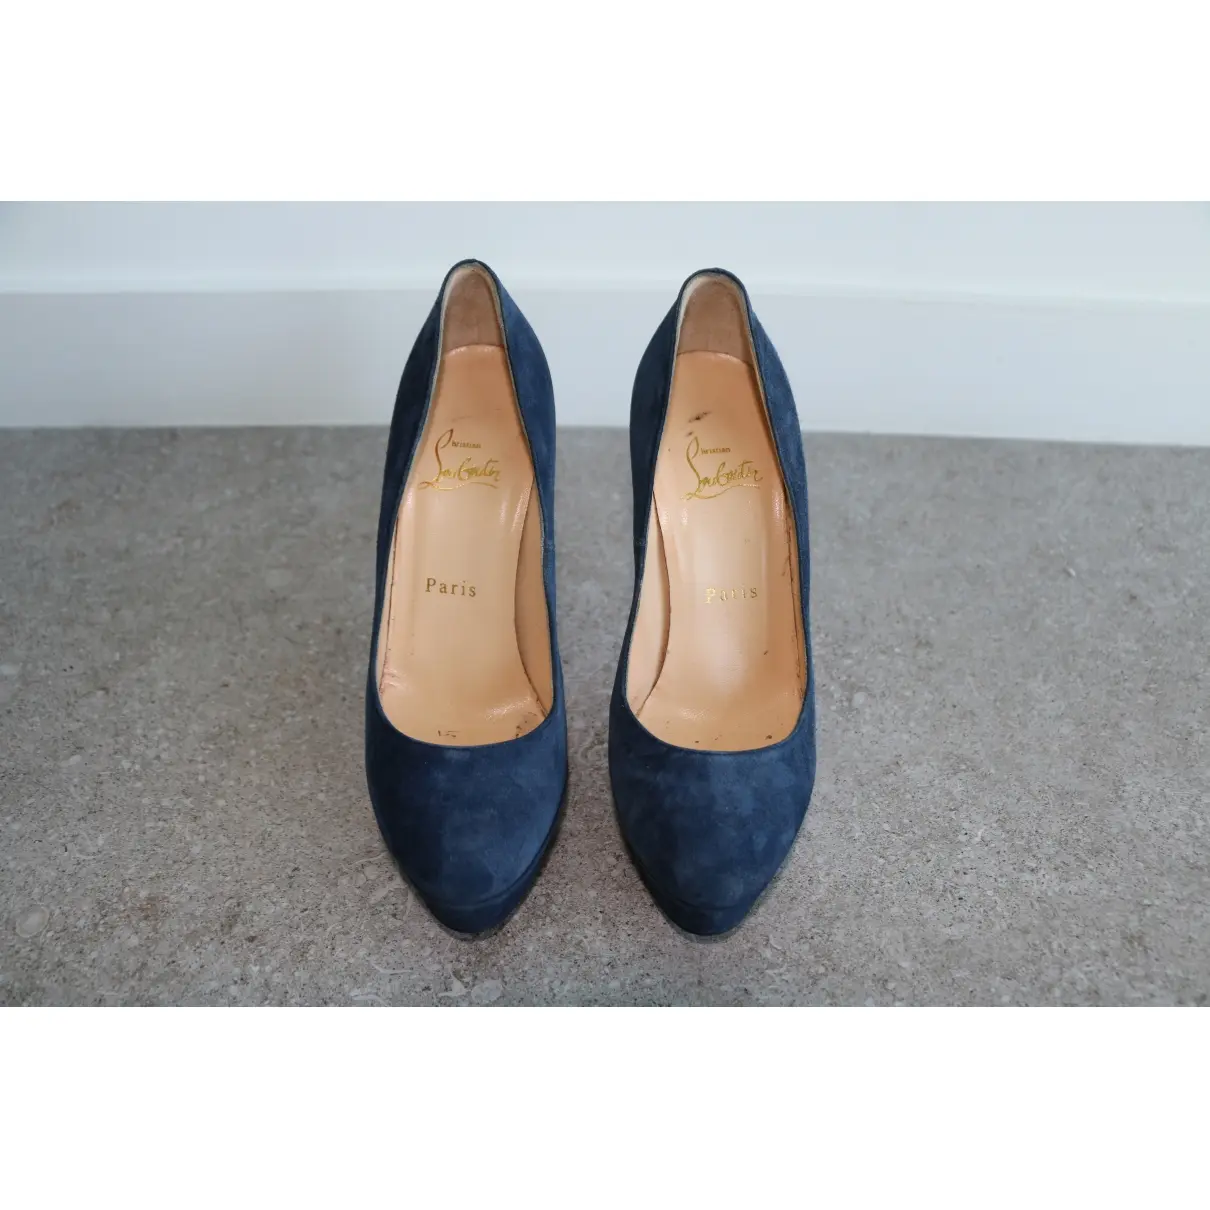 Christian Louboutin Bianca heels for sale